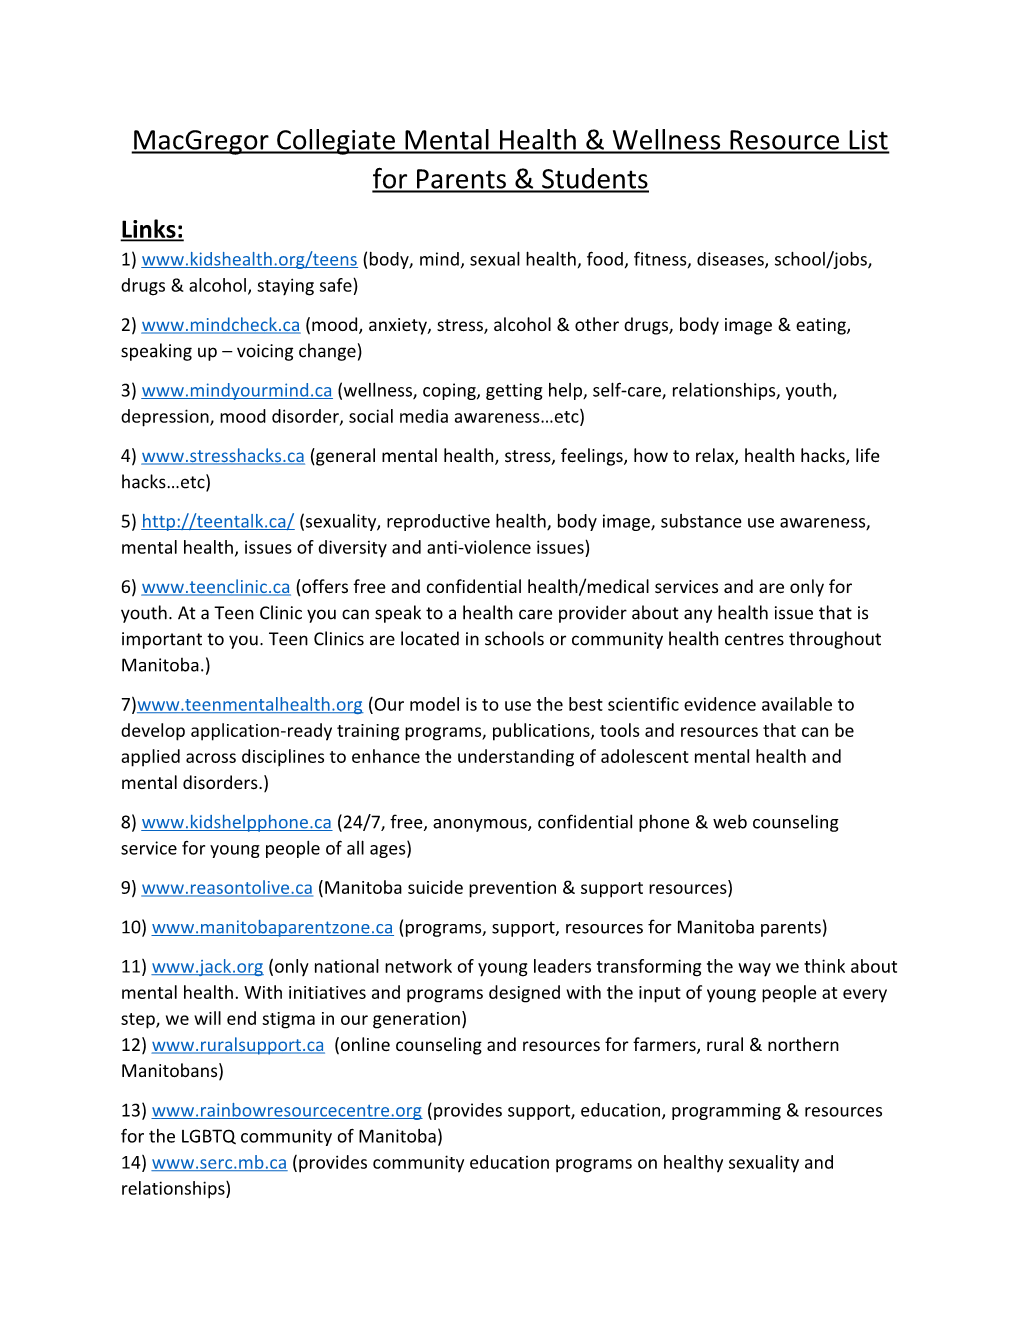 Macgregor Collegiate Mental Health & Wellness Resource List for Parents & Students